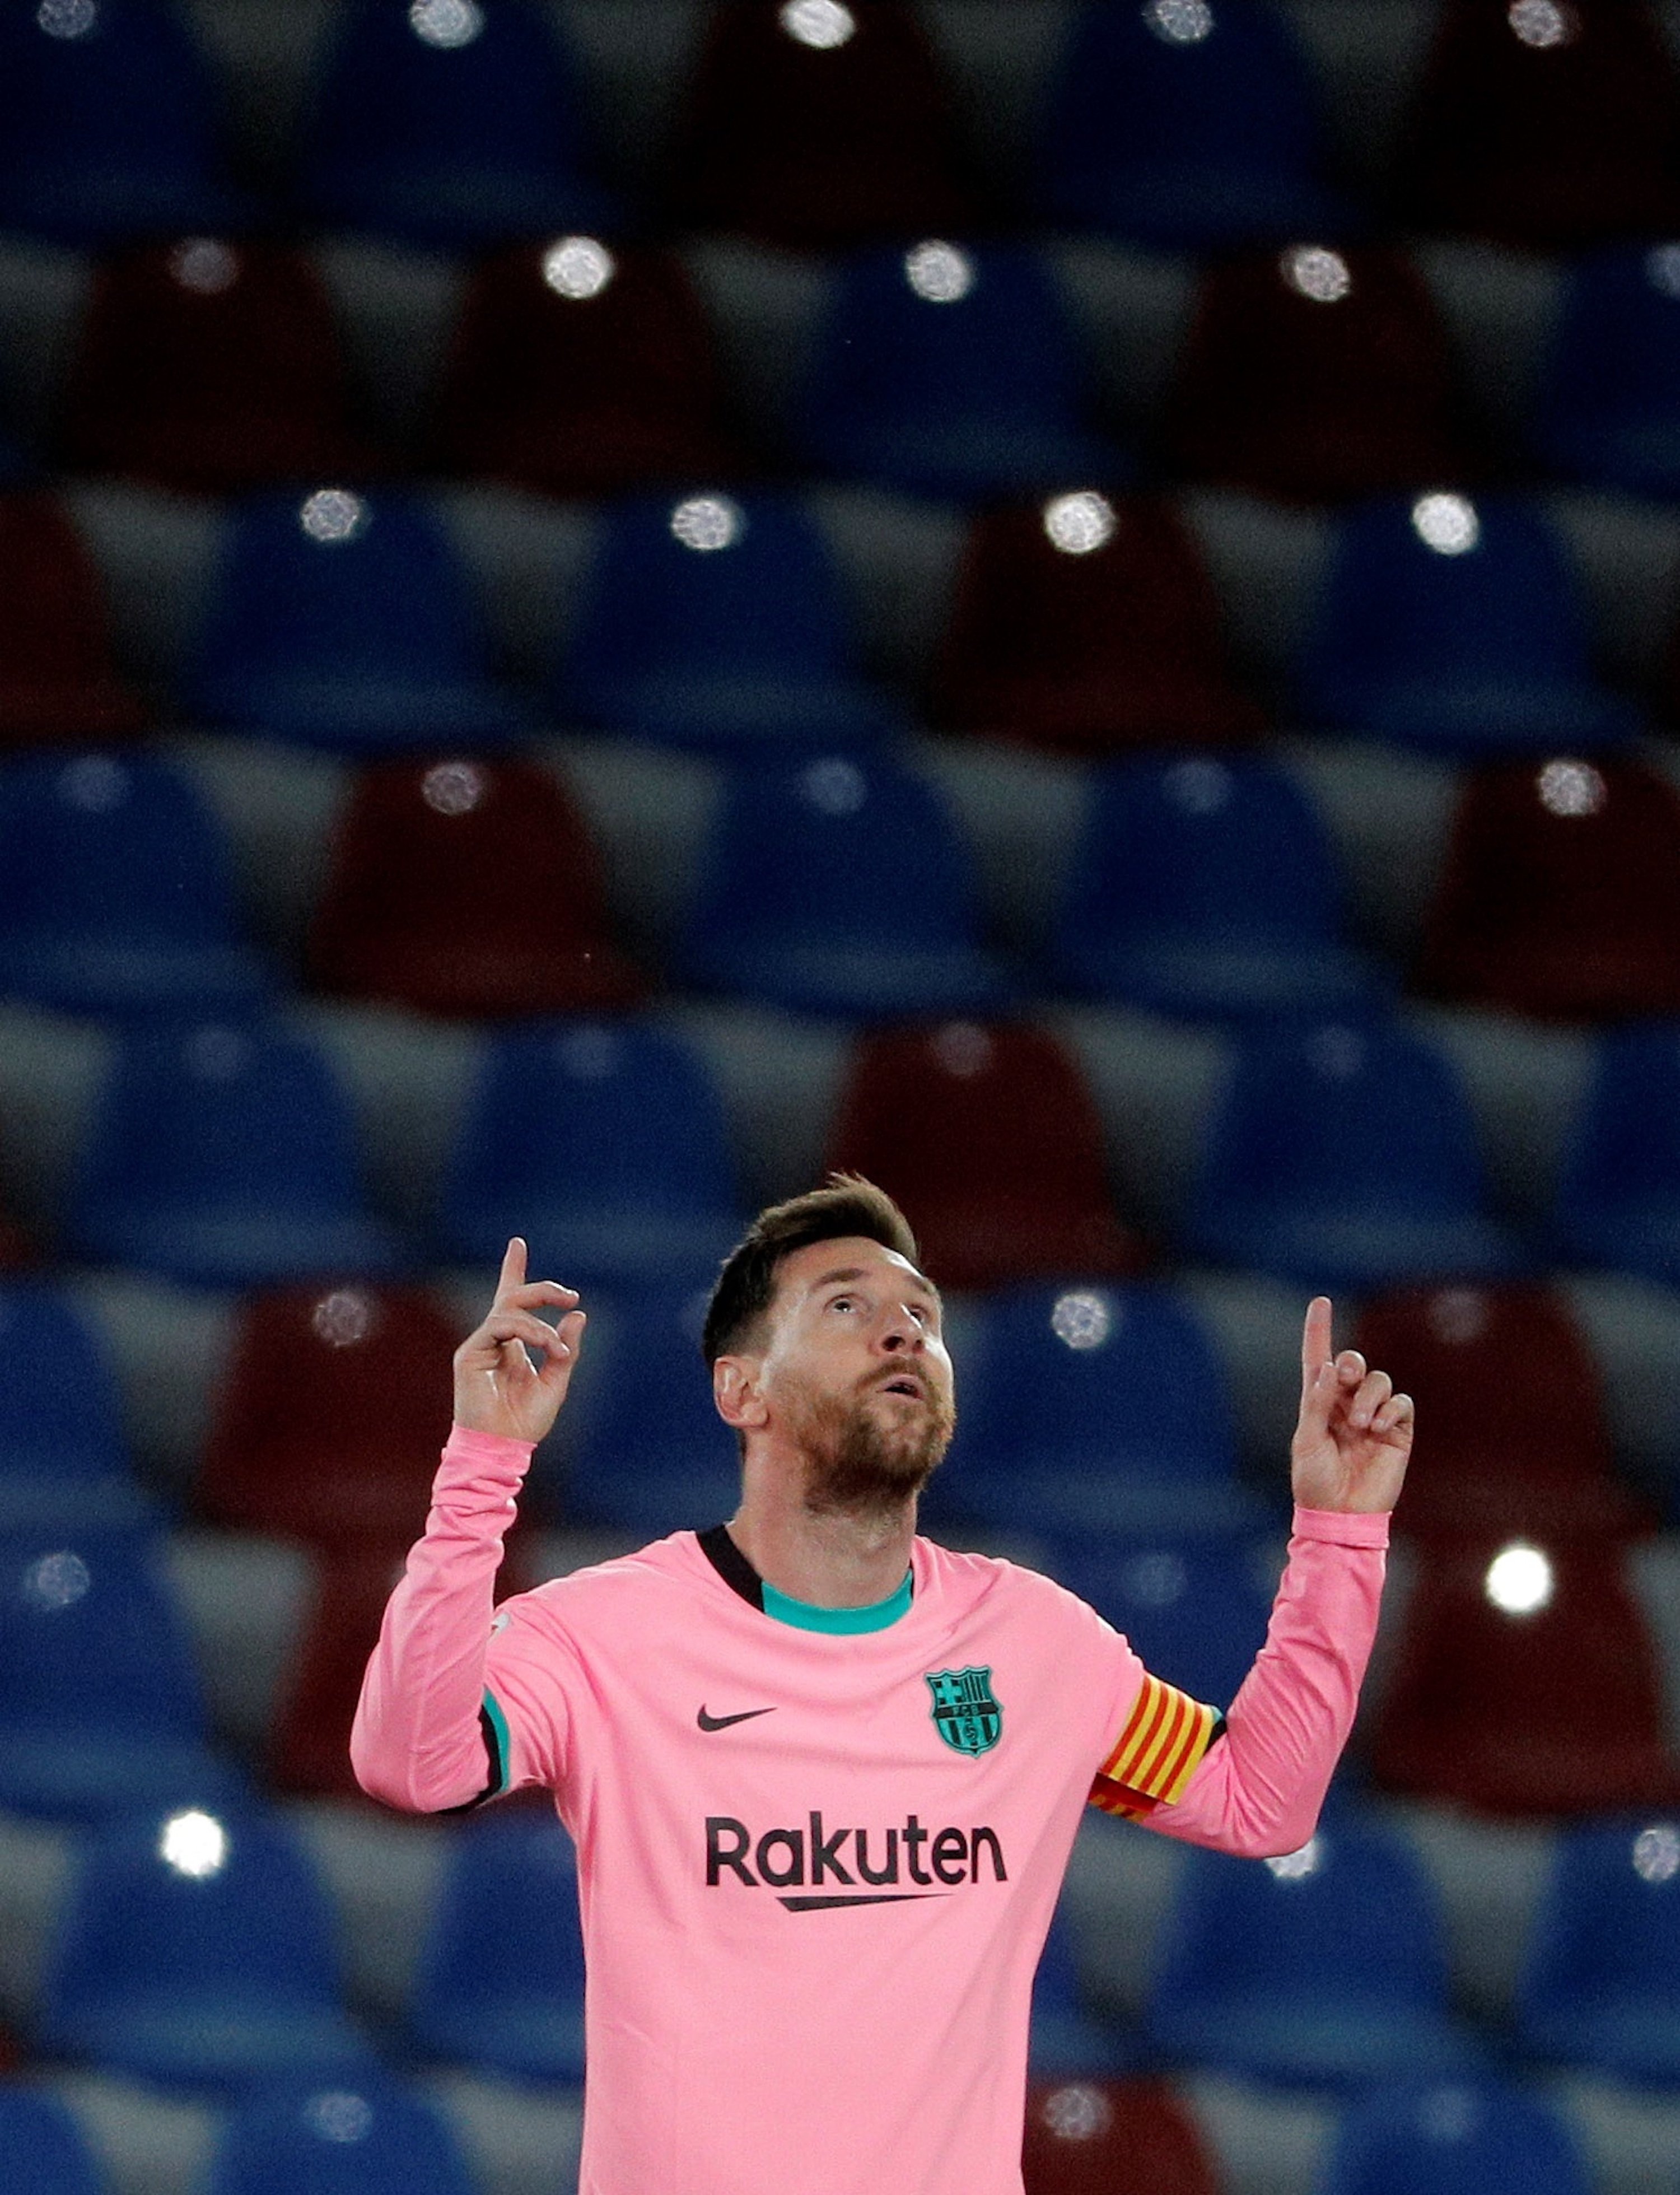 ¿Quién crees que es responsable de que Messi no siga en el Barça?